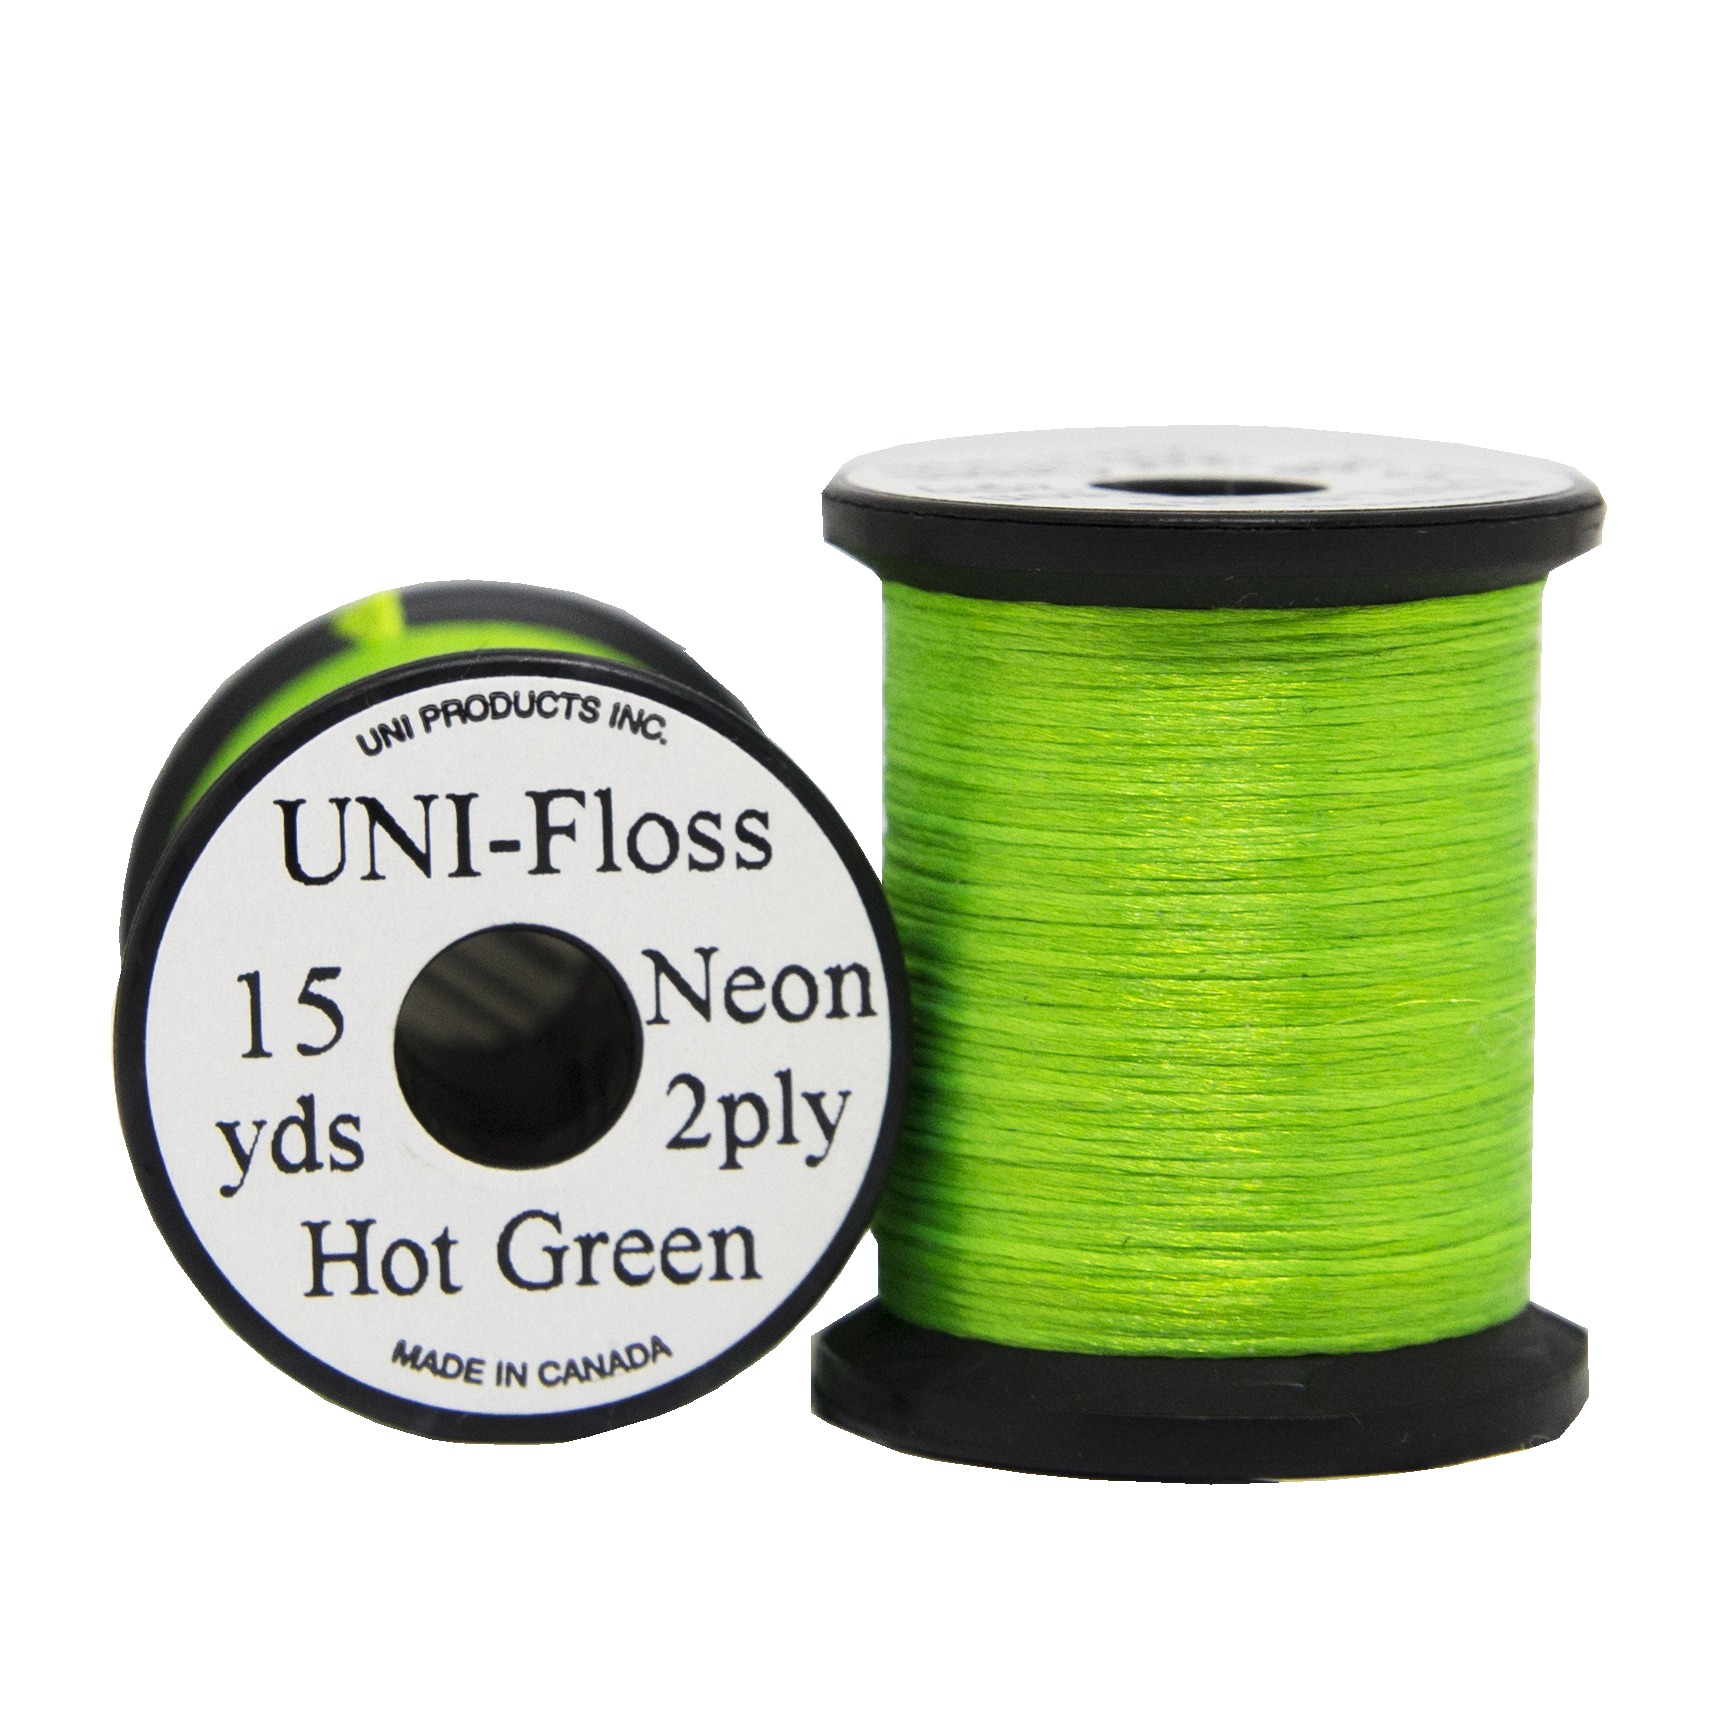 UNI Floss Polyester Neon - Hot Green